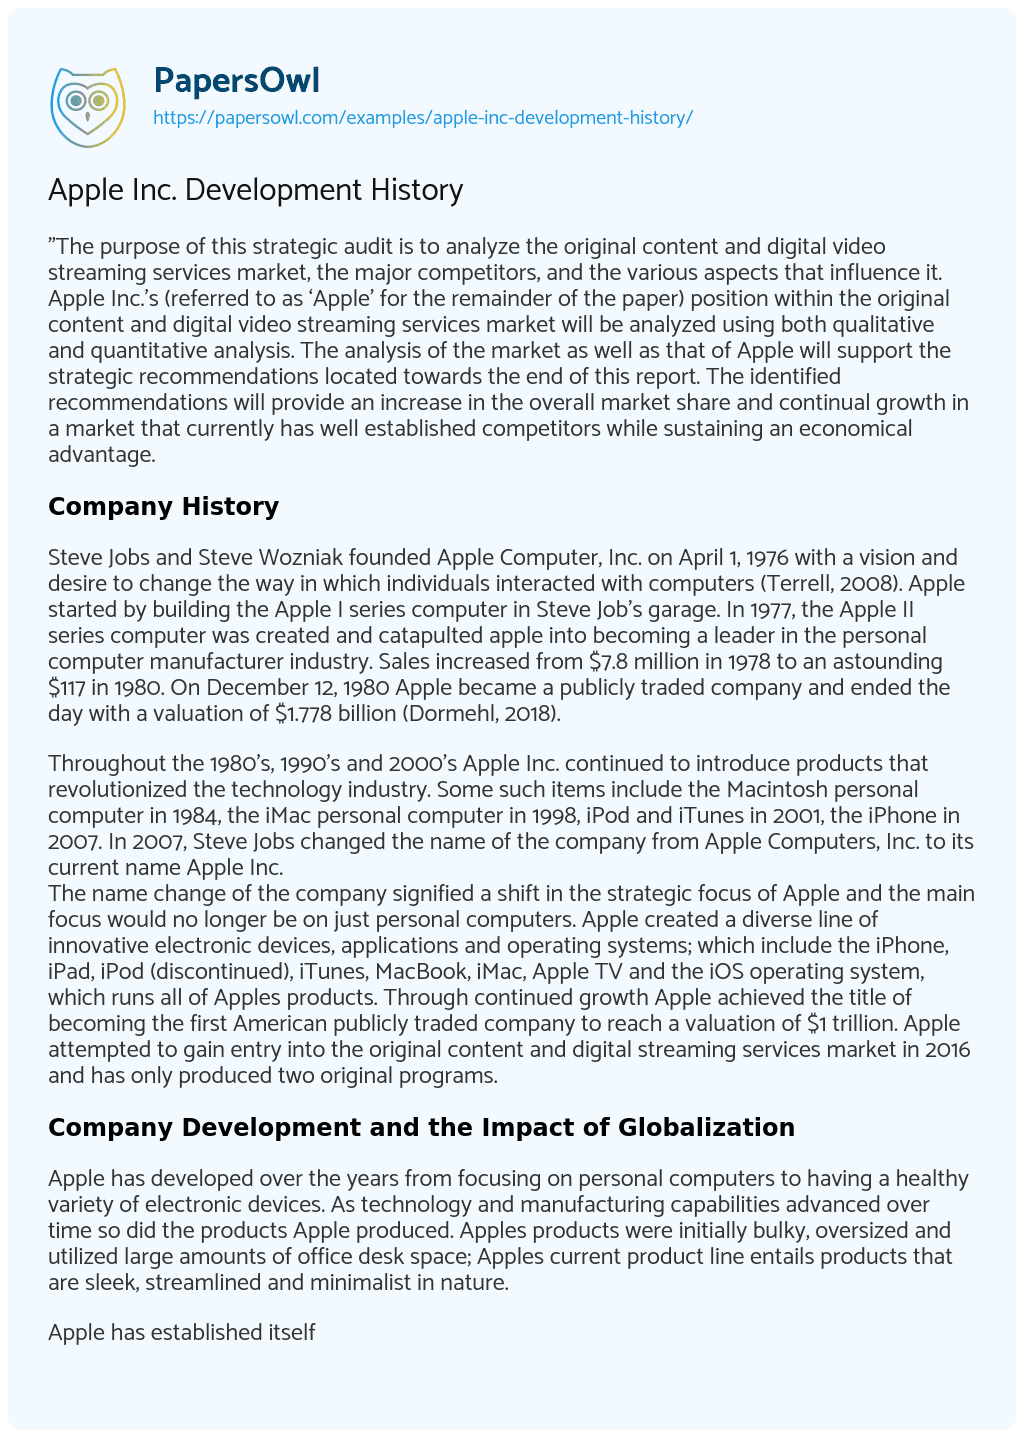 Essay on Apple Inc. Development History